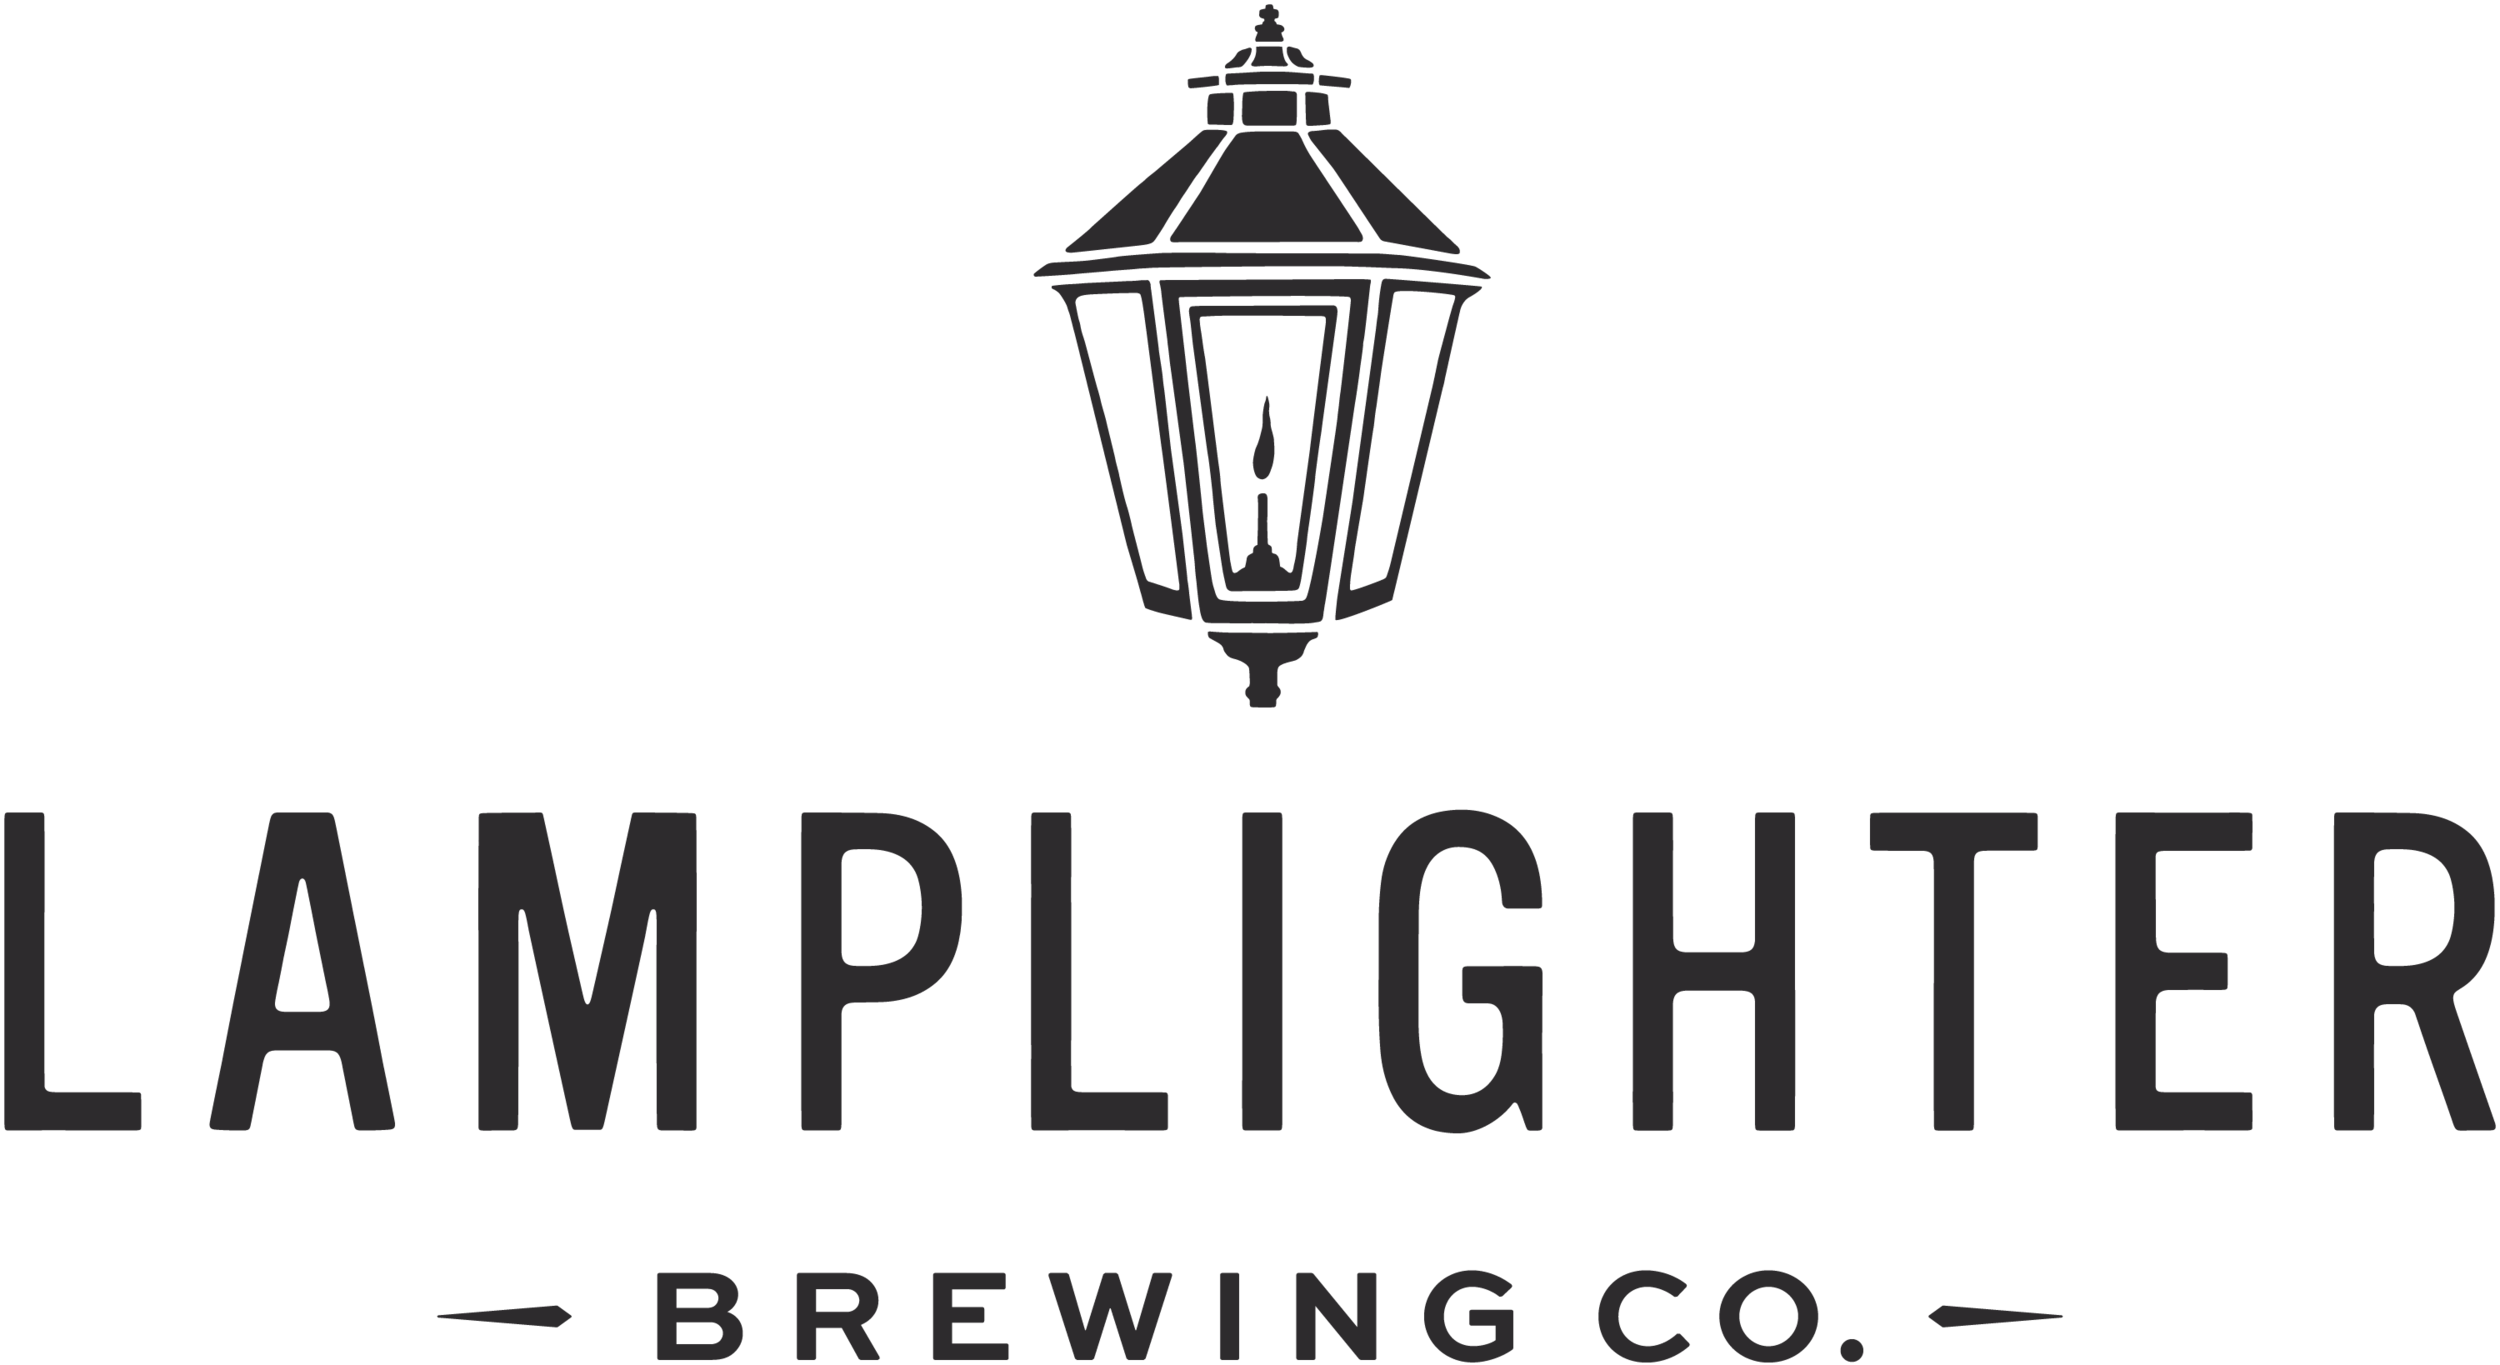 Lamplighter logo.png